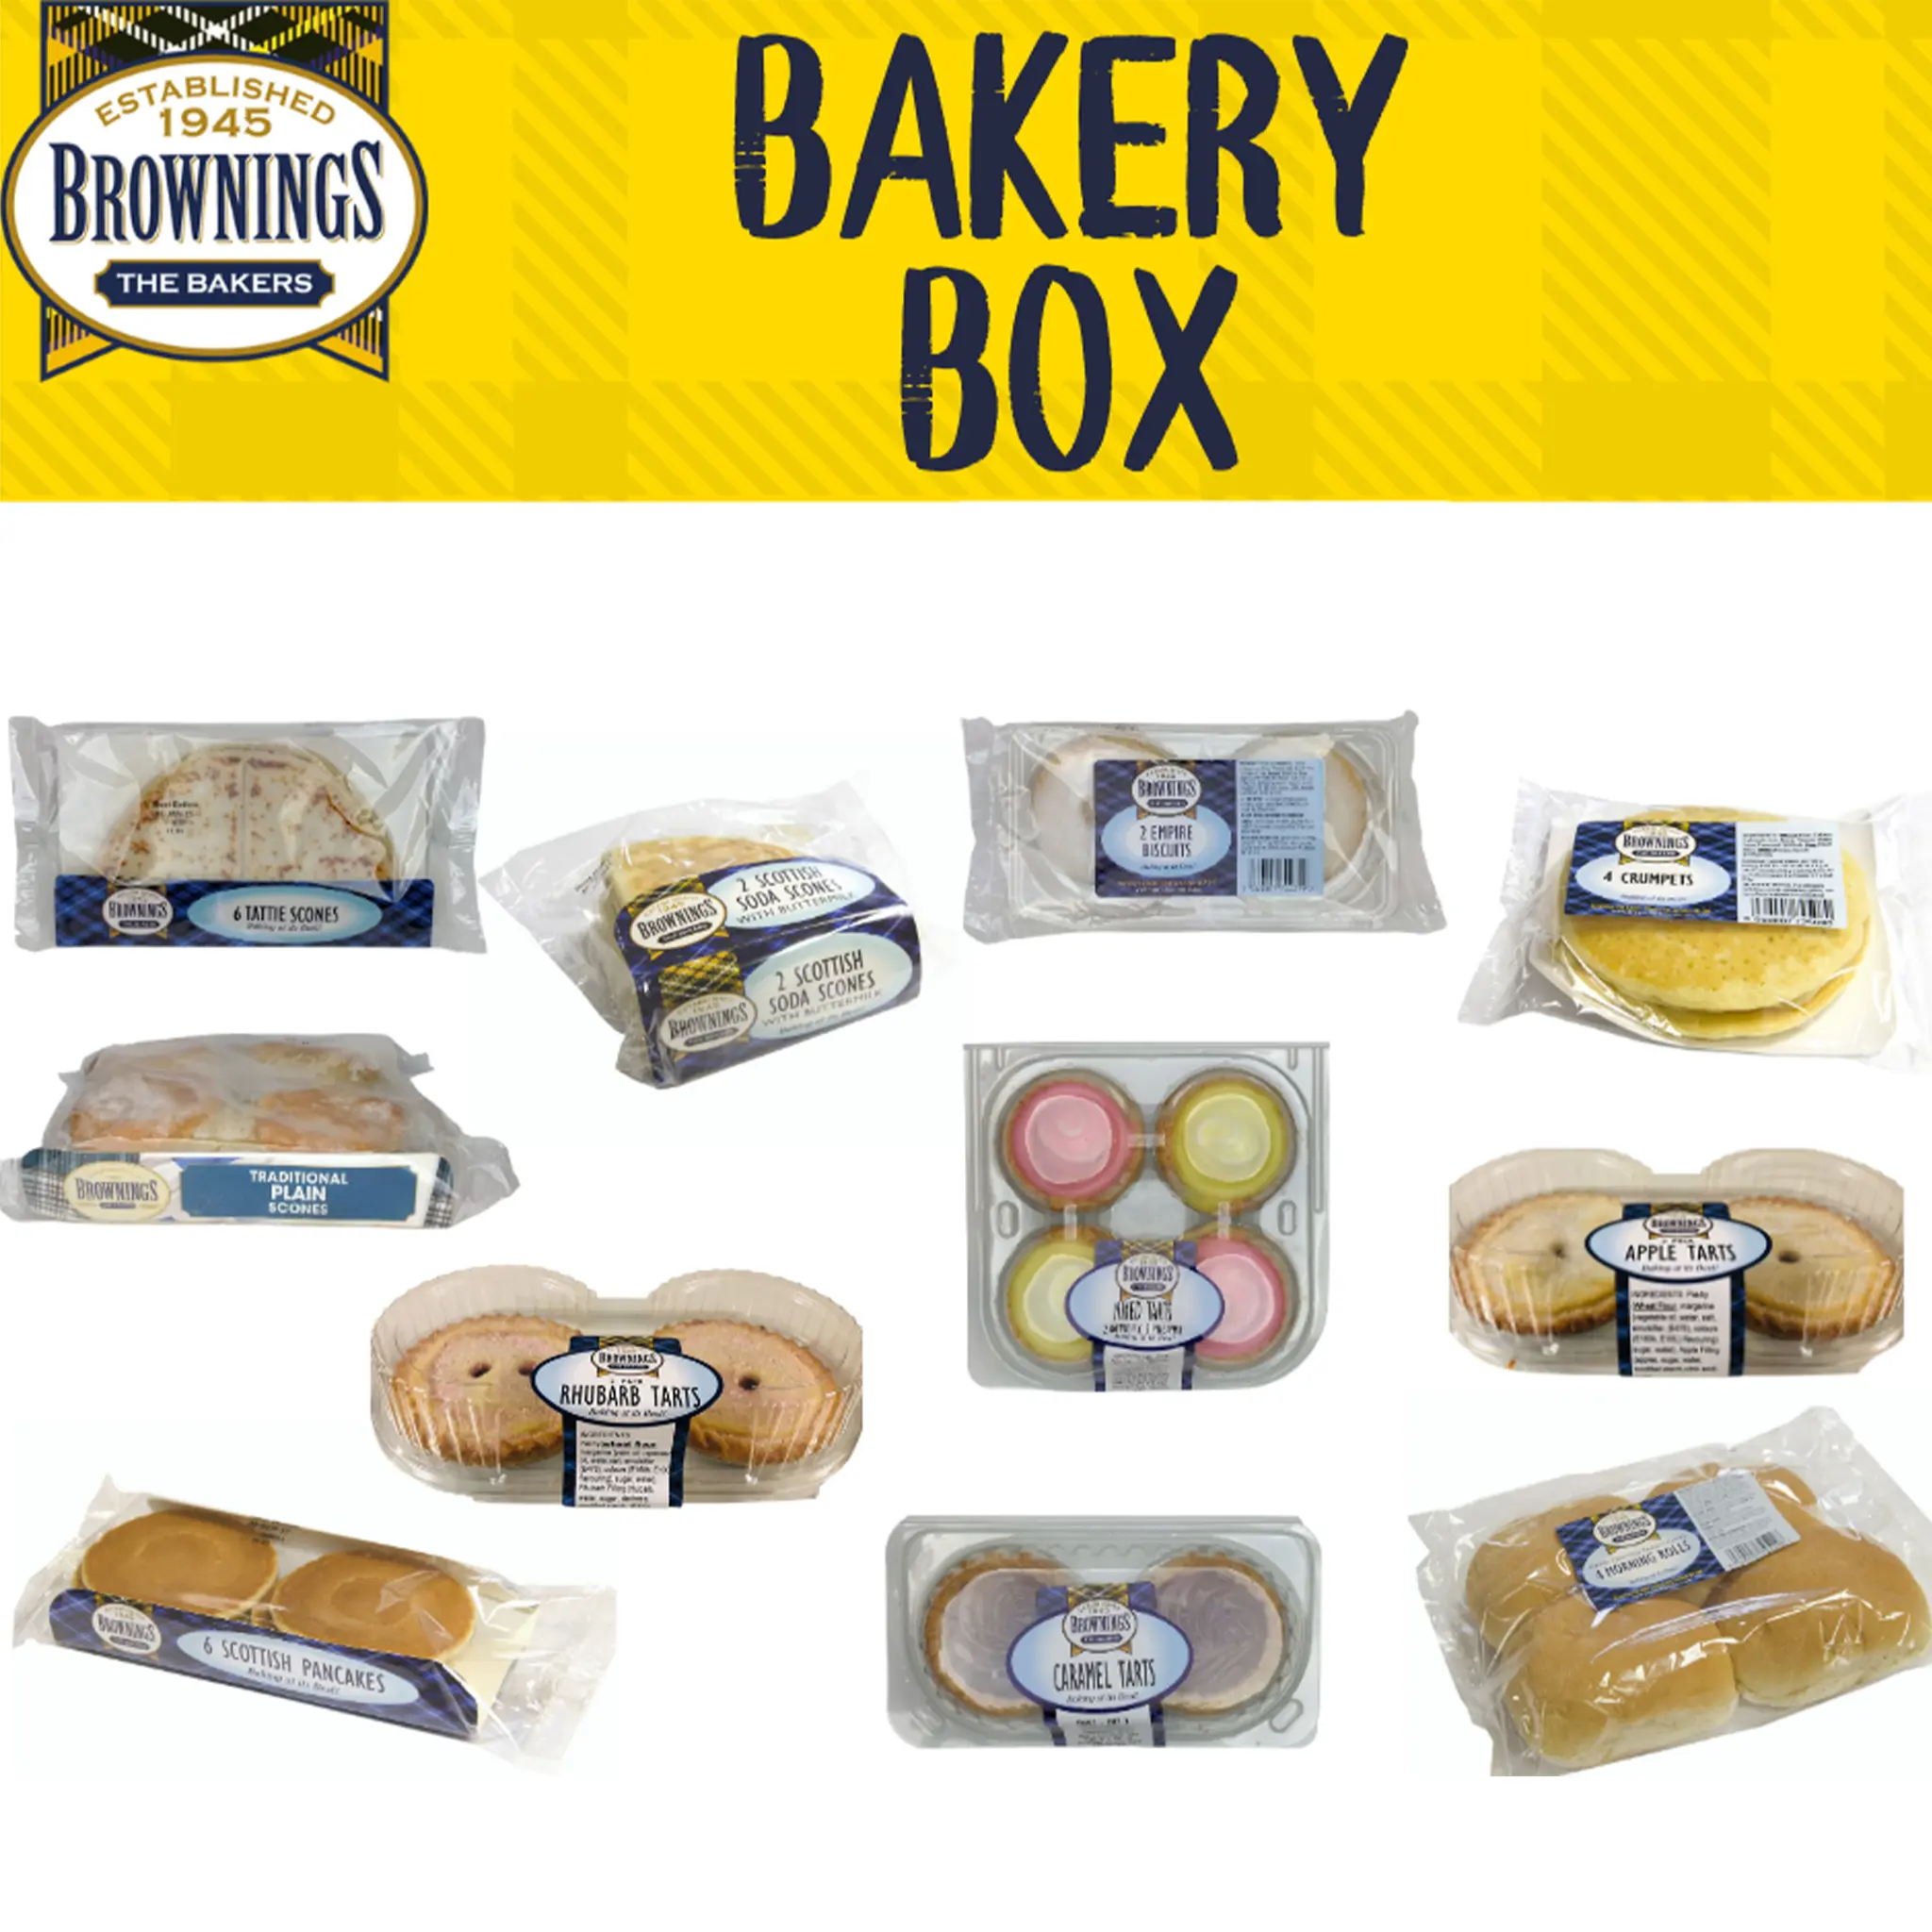 Brownings Bakery Box